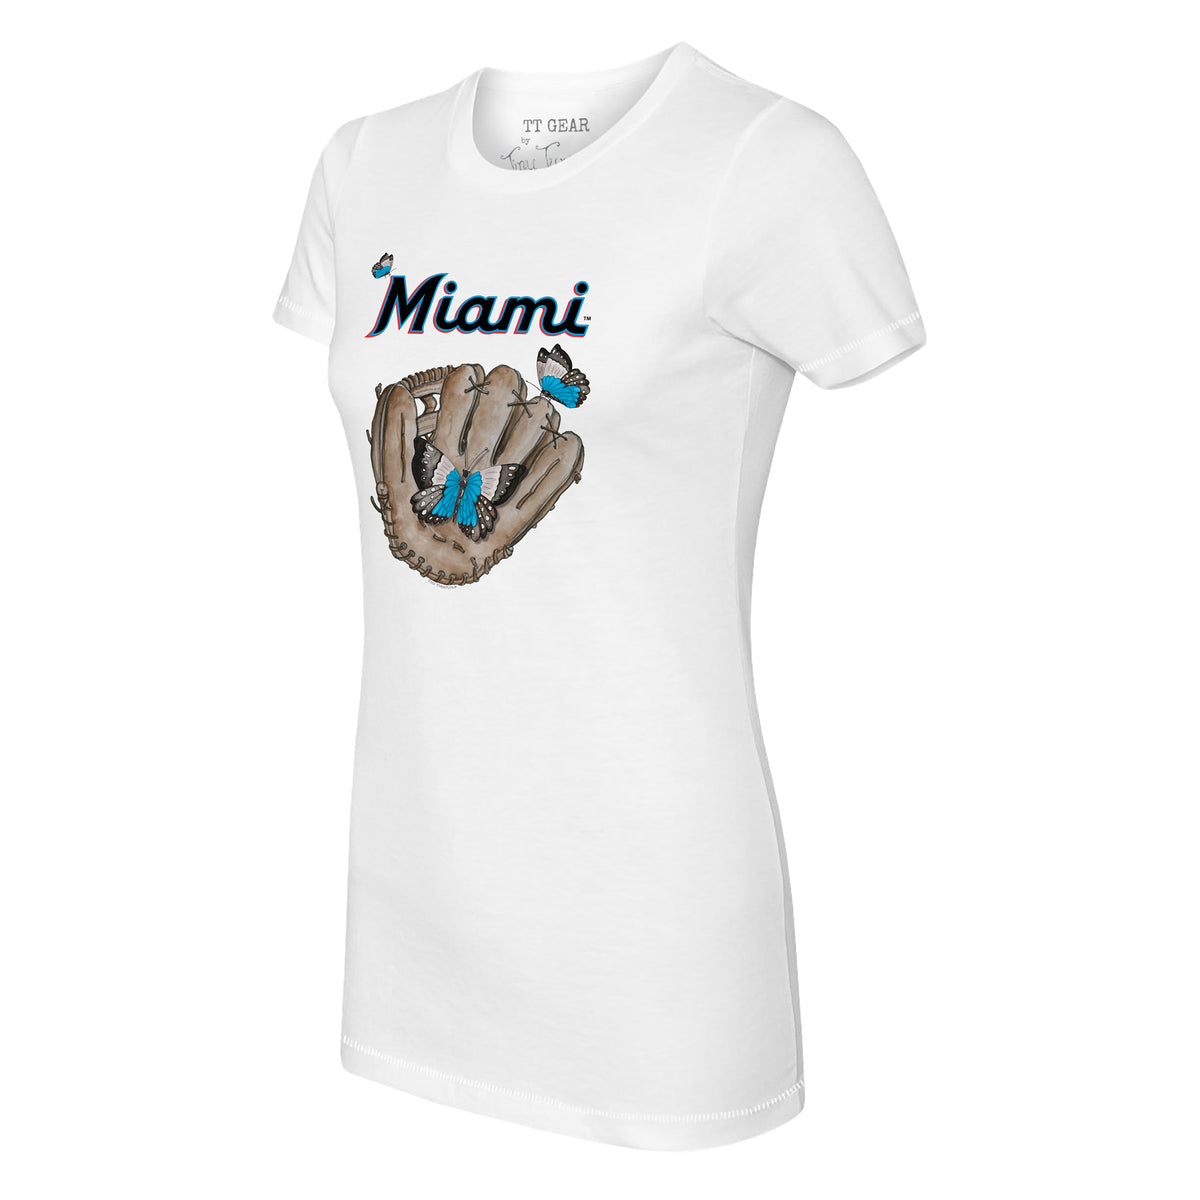 Miami Marlins Butterfly Glove Tee Shirt